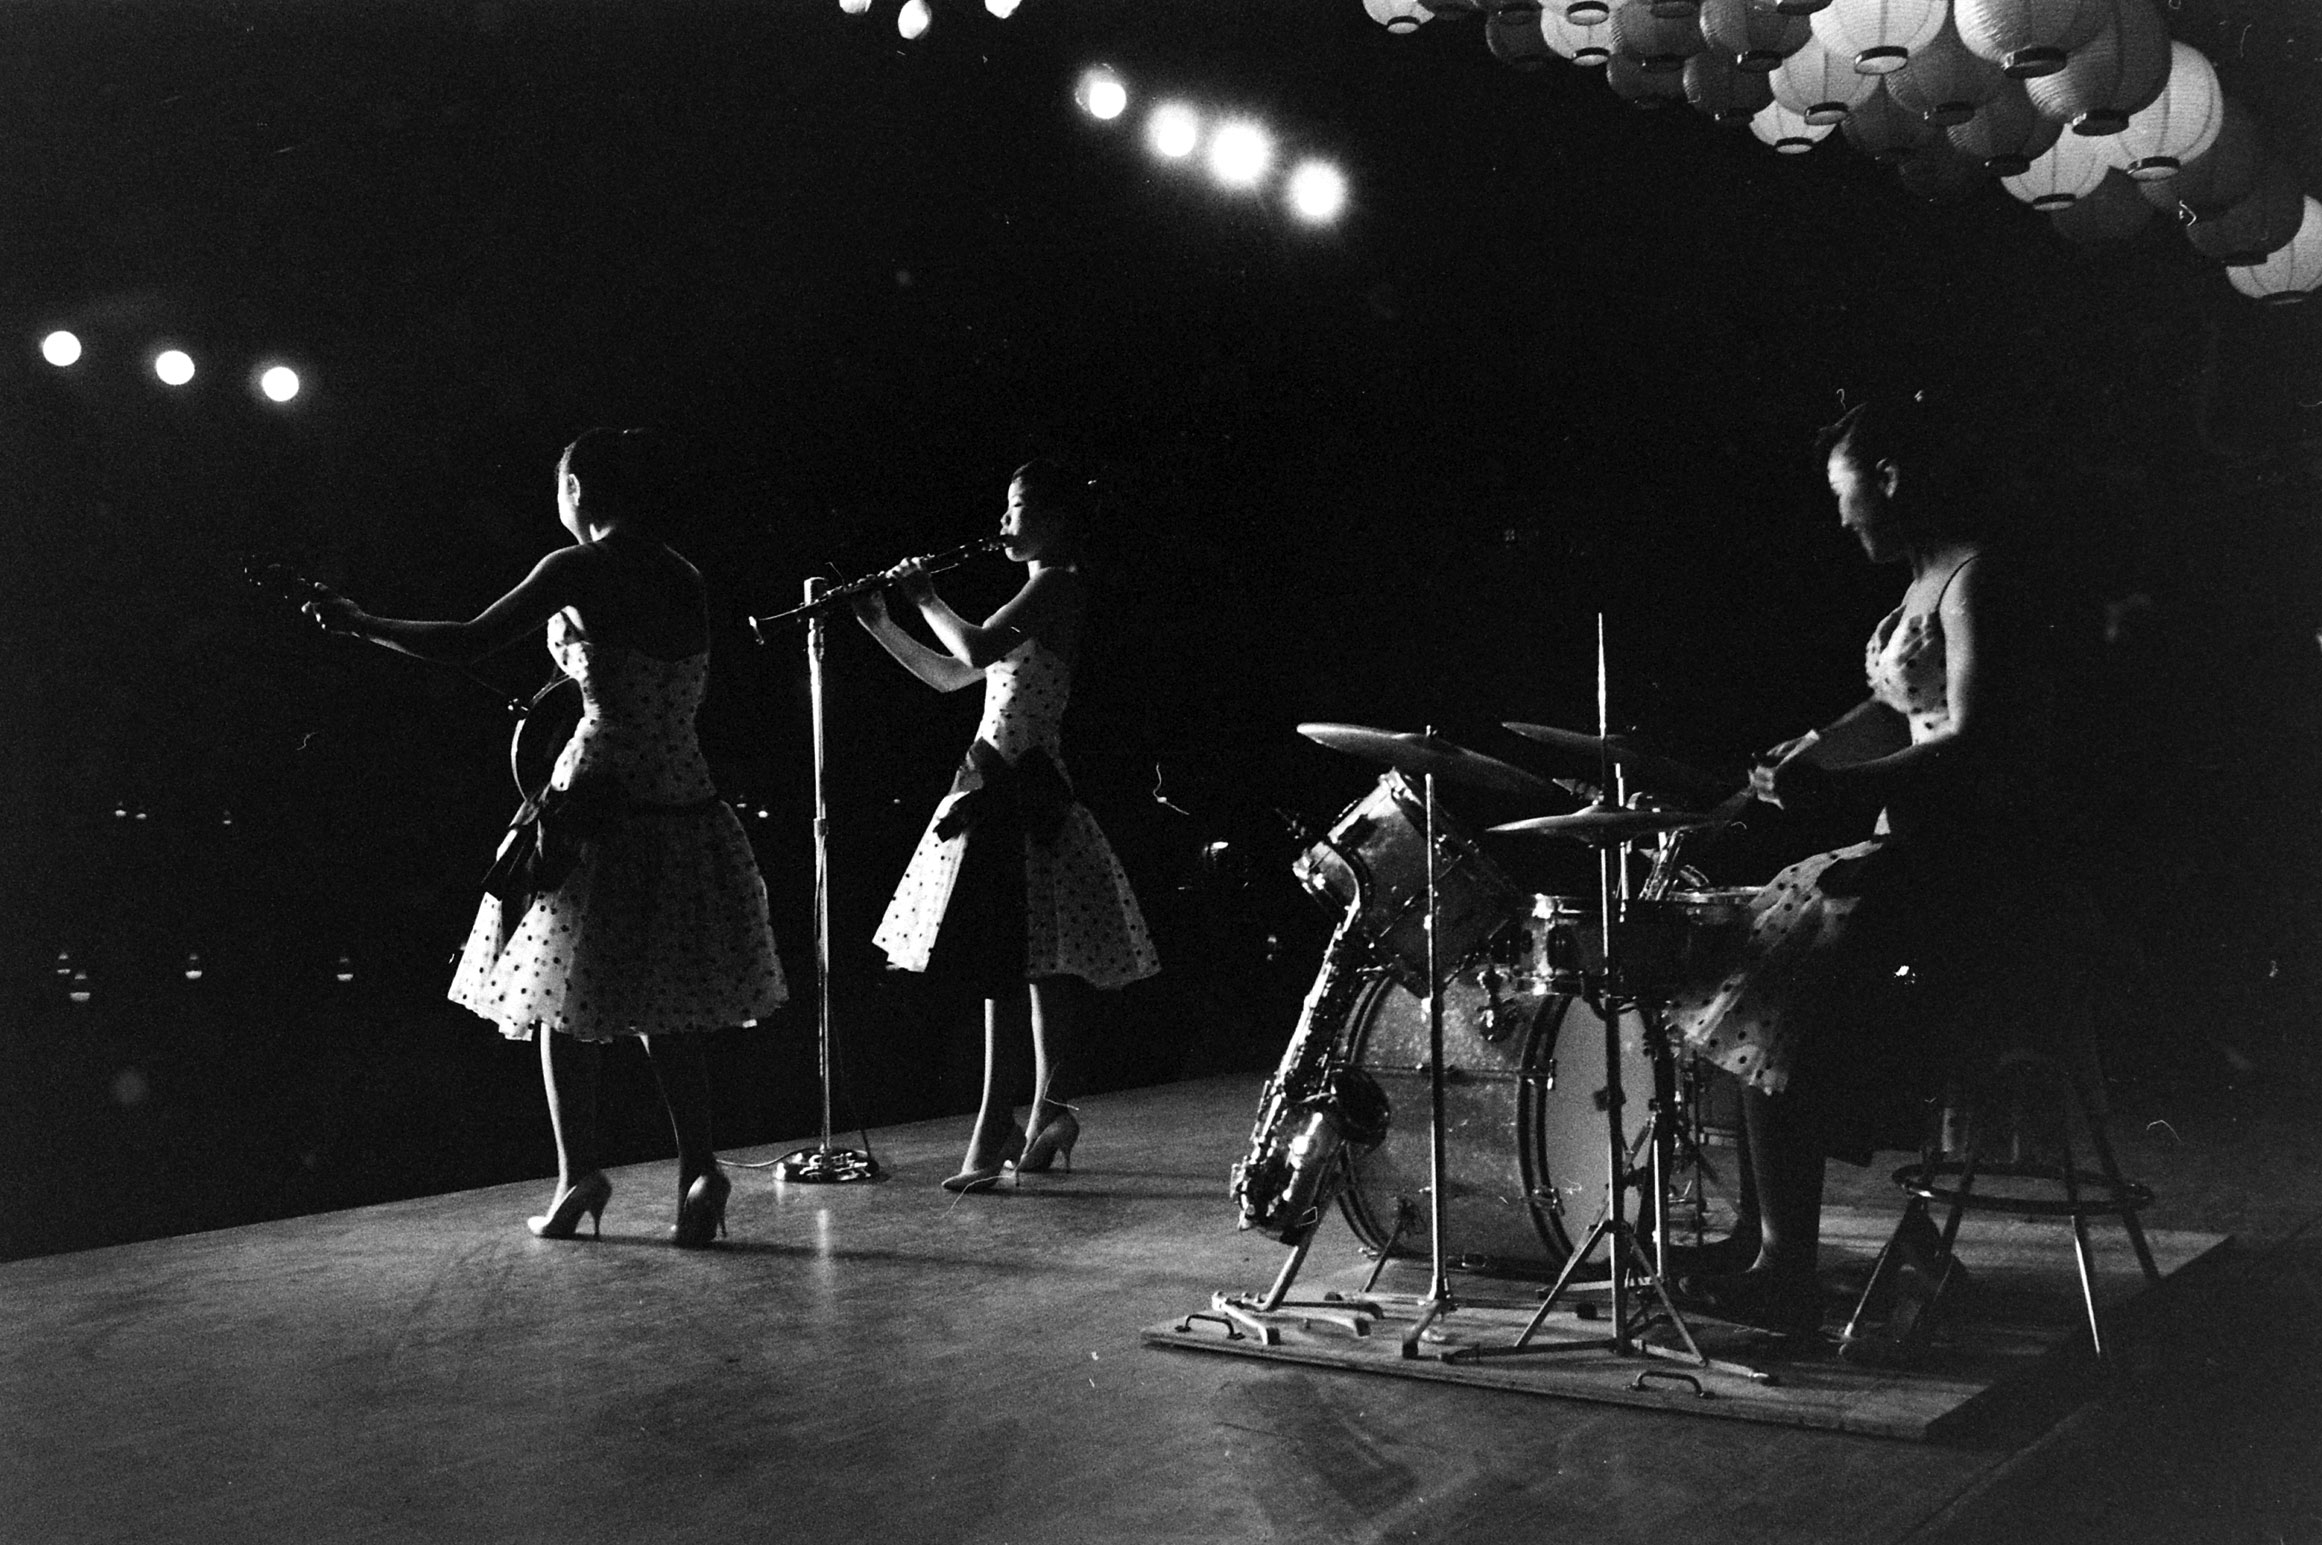 Kim Sisters, Chicago, 1960.